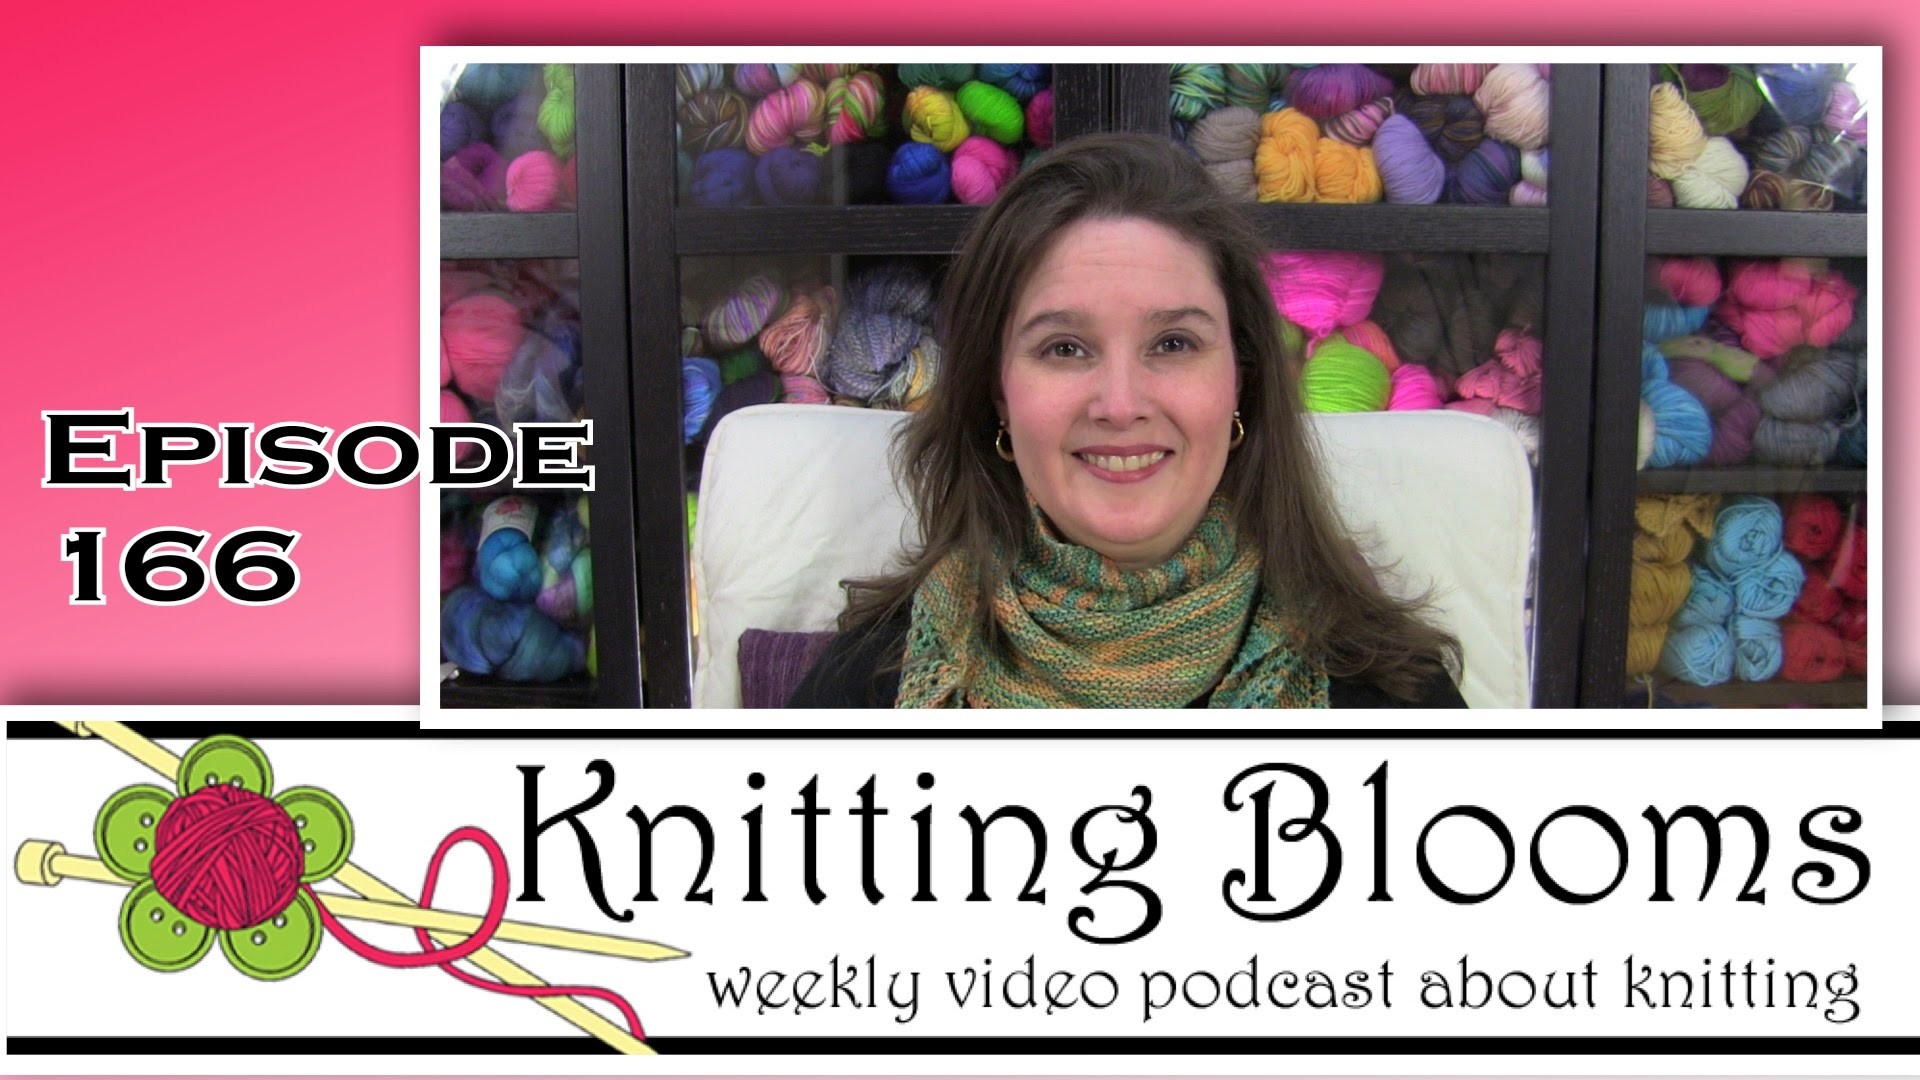 Knitting podcasts on youtube